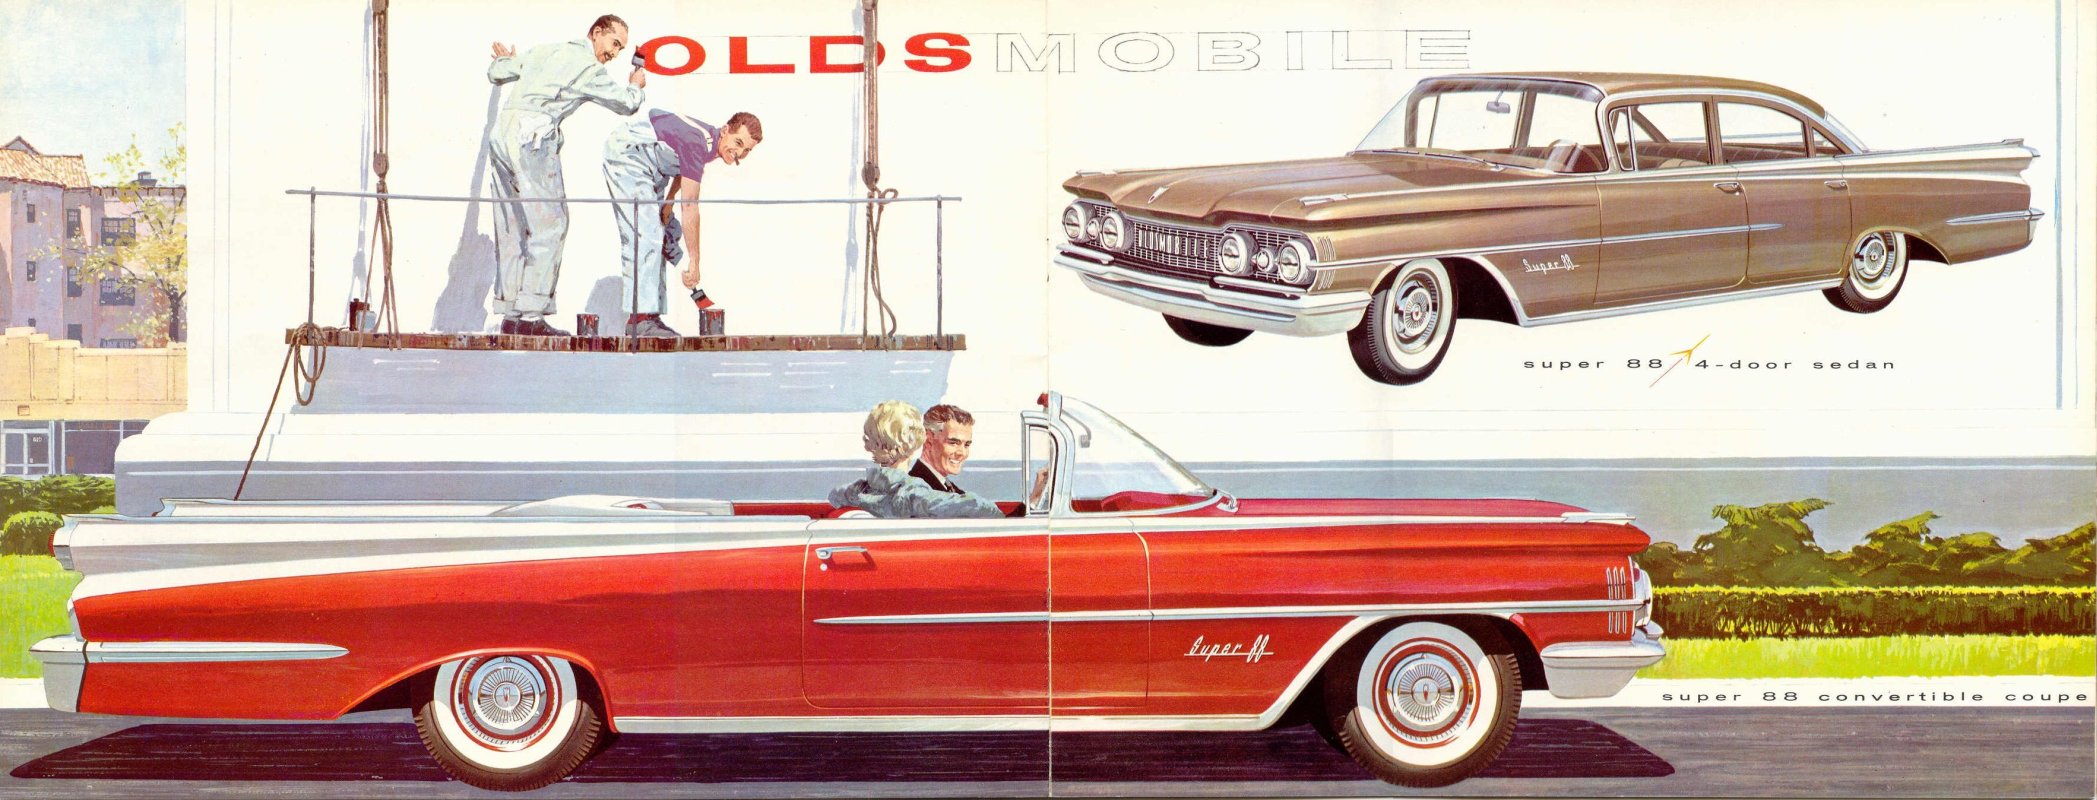 1959 Oldsmobile Canadian Motor Cars Brochure Page 16